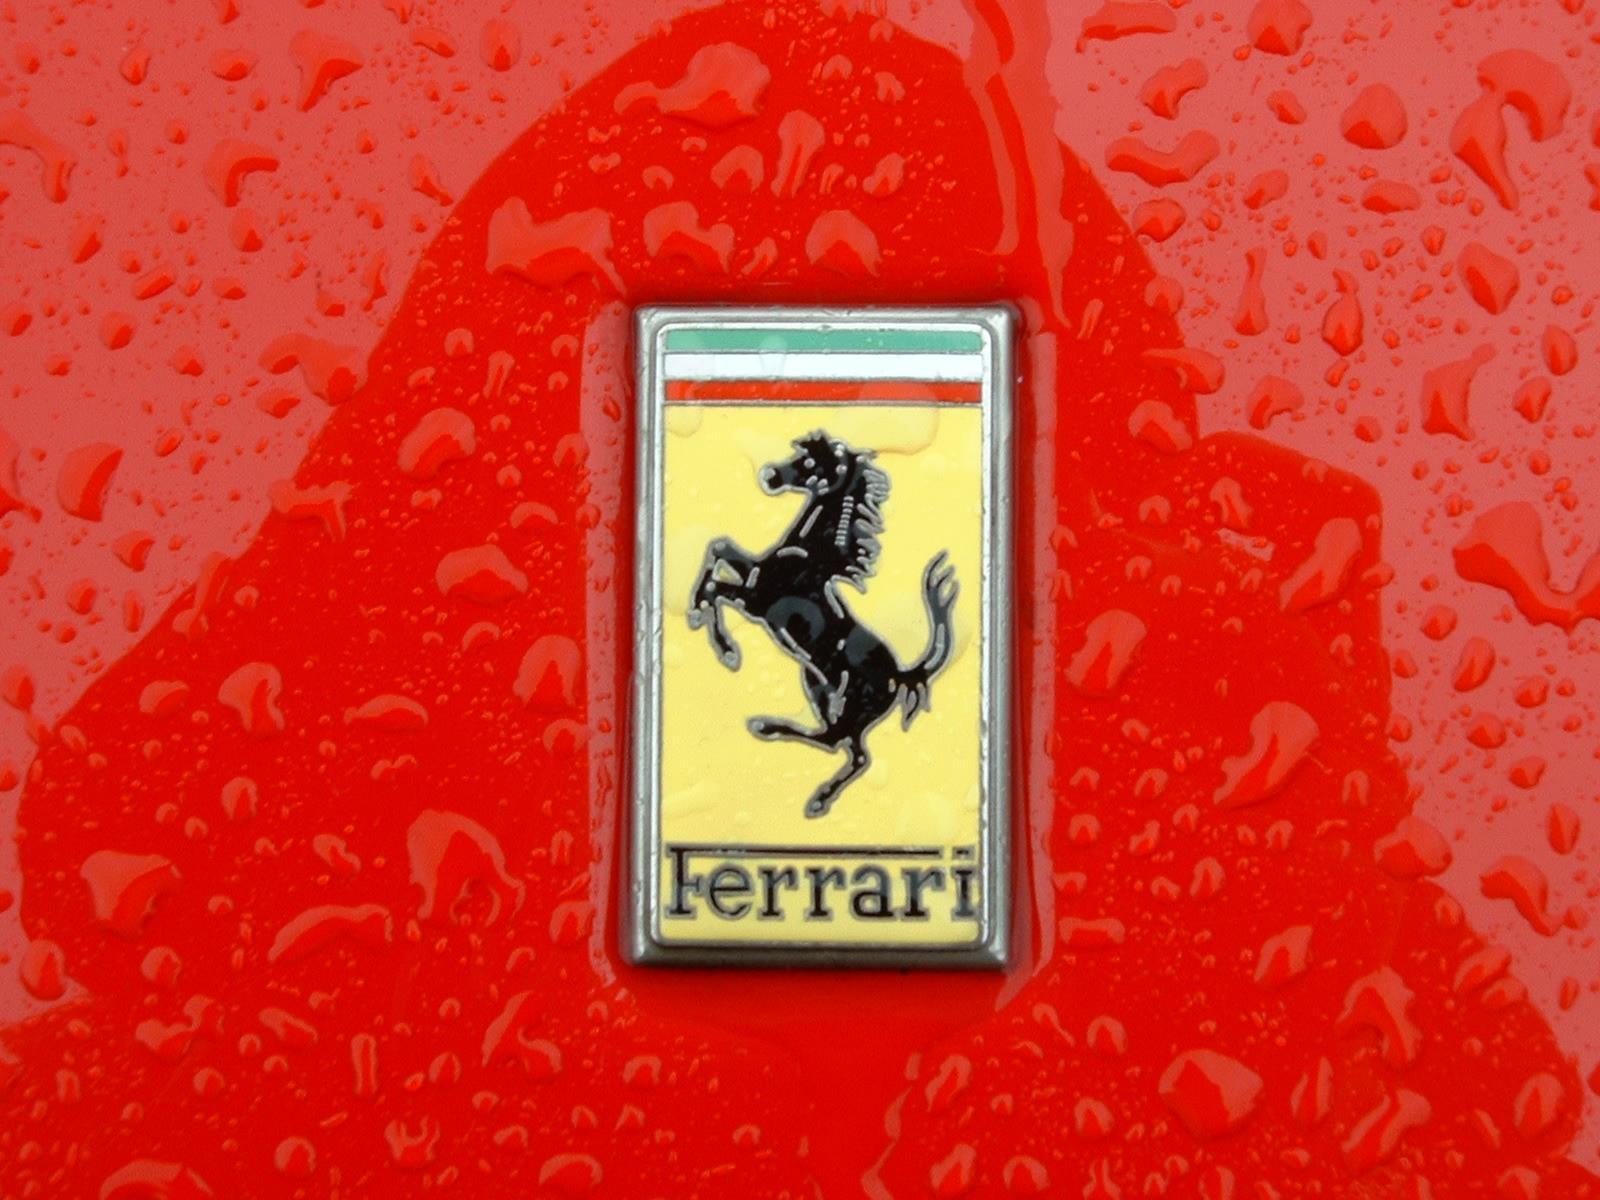 Ferrari Logo 118 44163 Image HD Wallpaper. Wallfoy.com